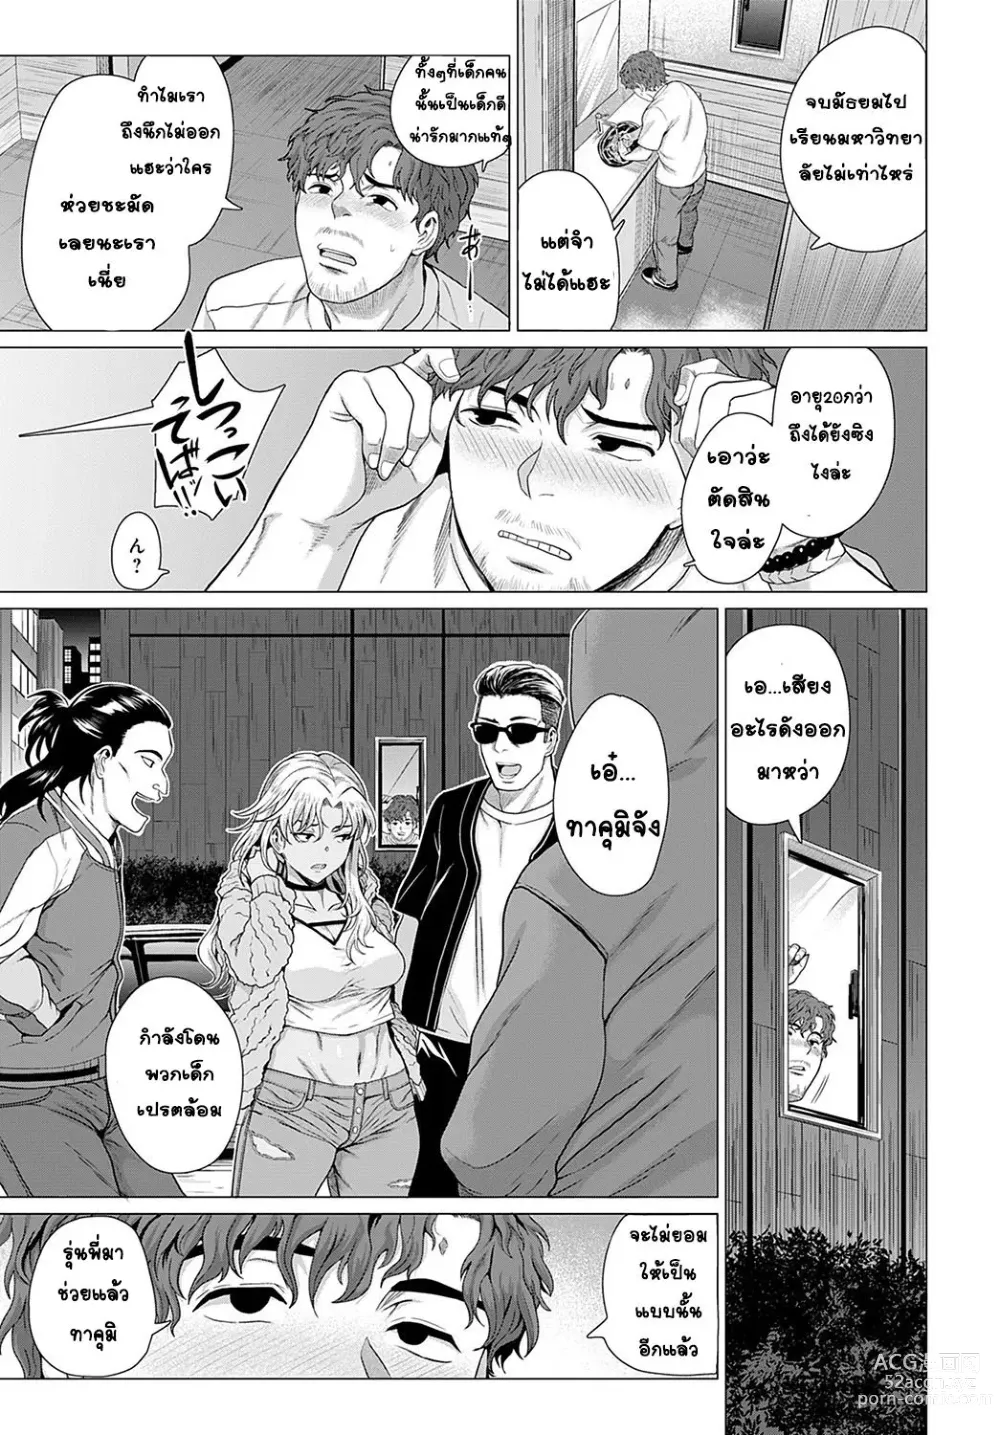 Page 3 of manga Douzo, Okawarinaku.